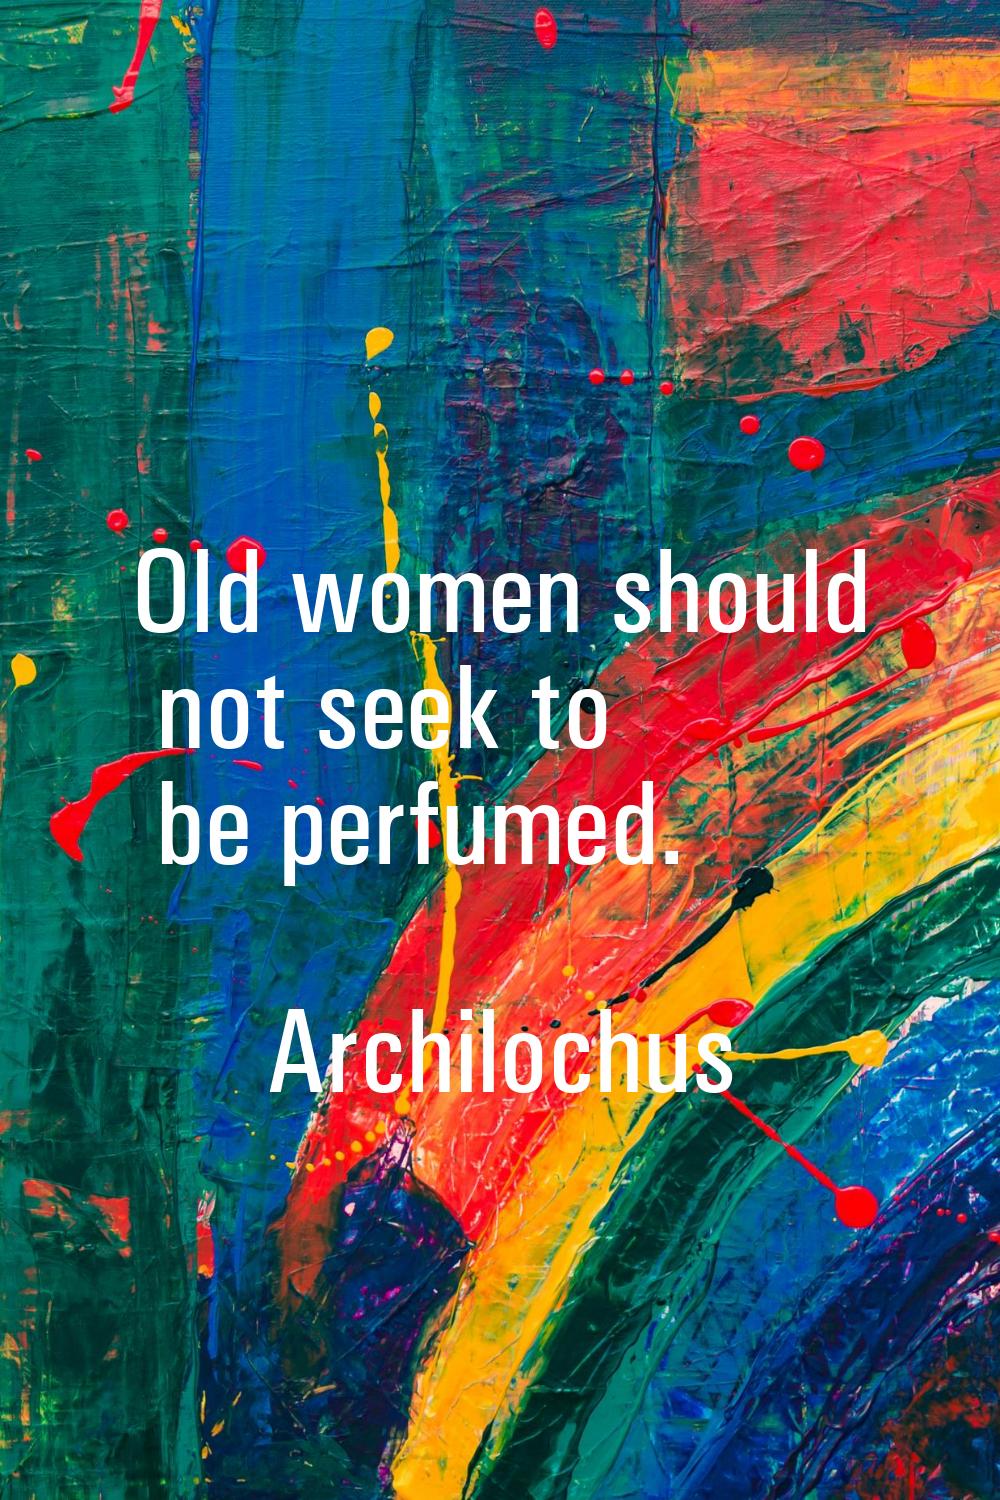 Old women should not seek to be perfumed.